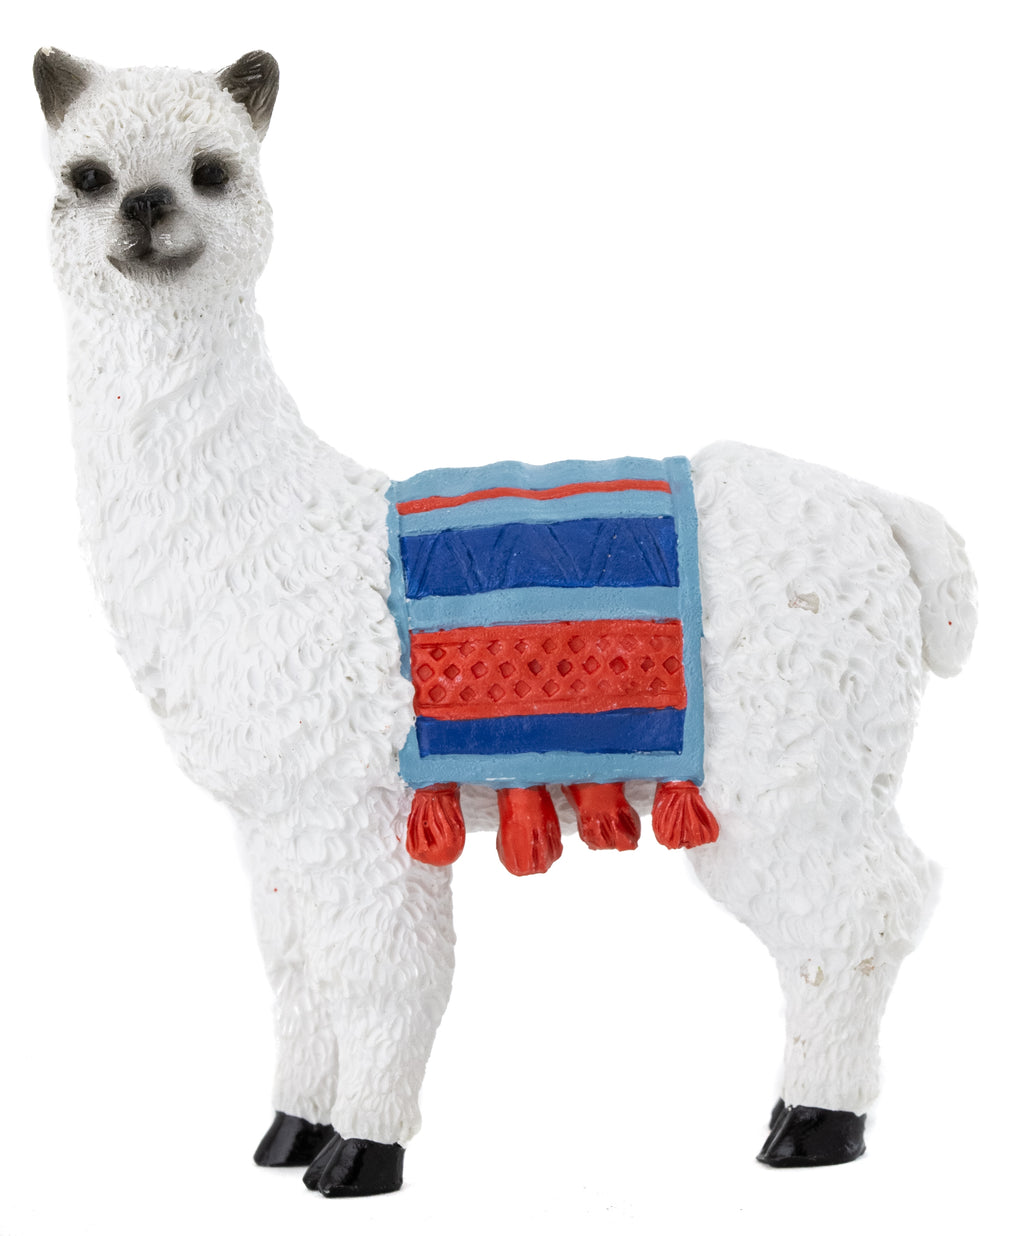 Llama with Blanket, Miniature Llama, Diorama Llama - Mini Fairy Garden World